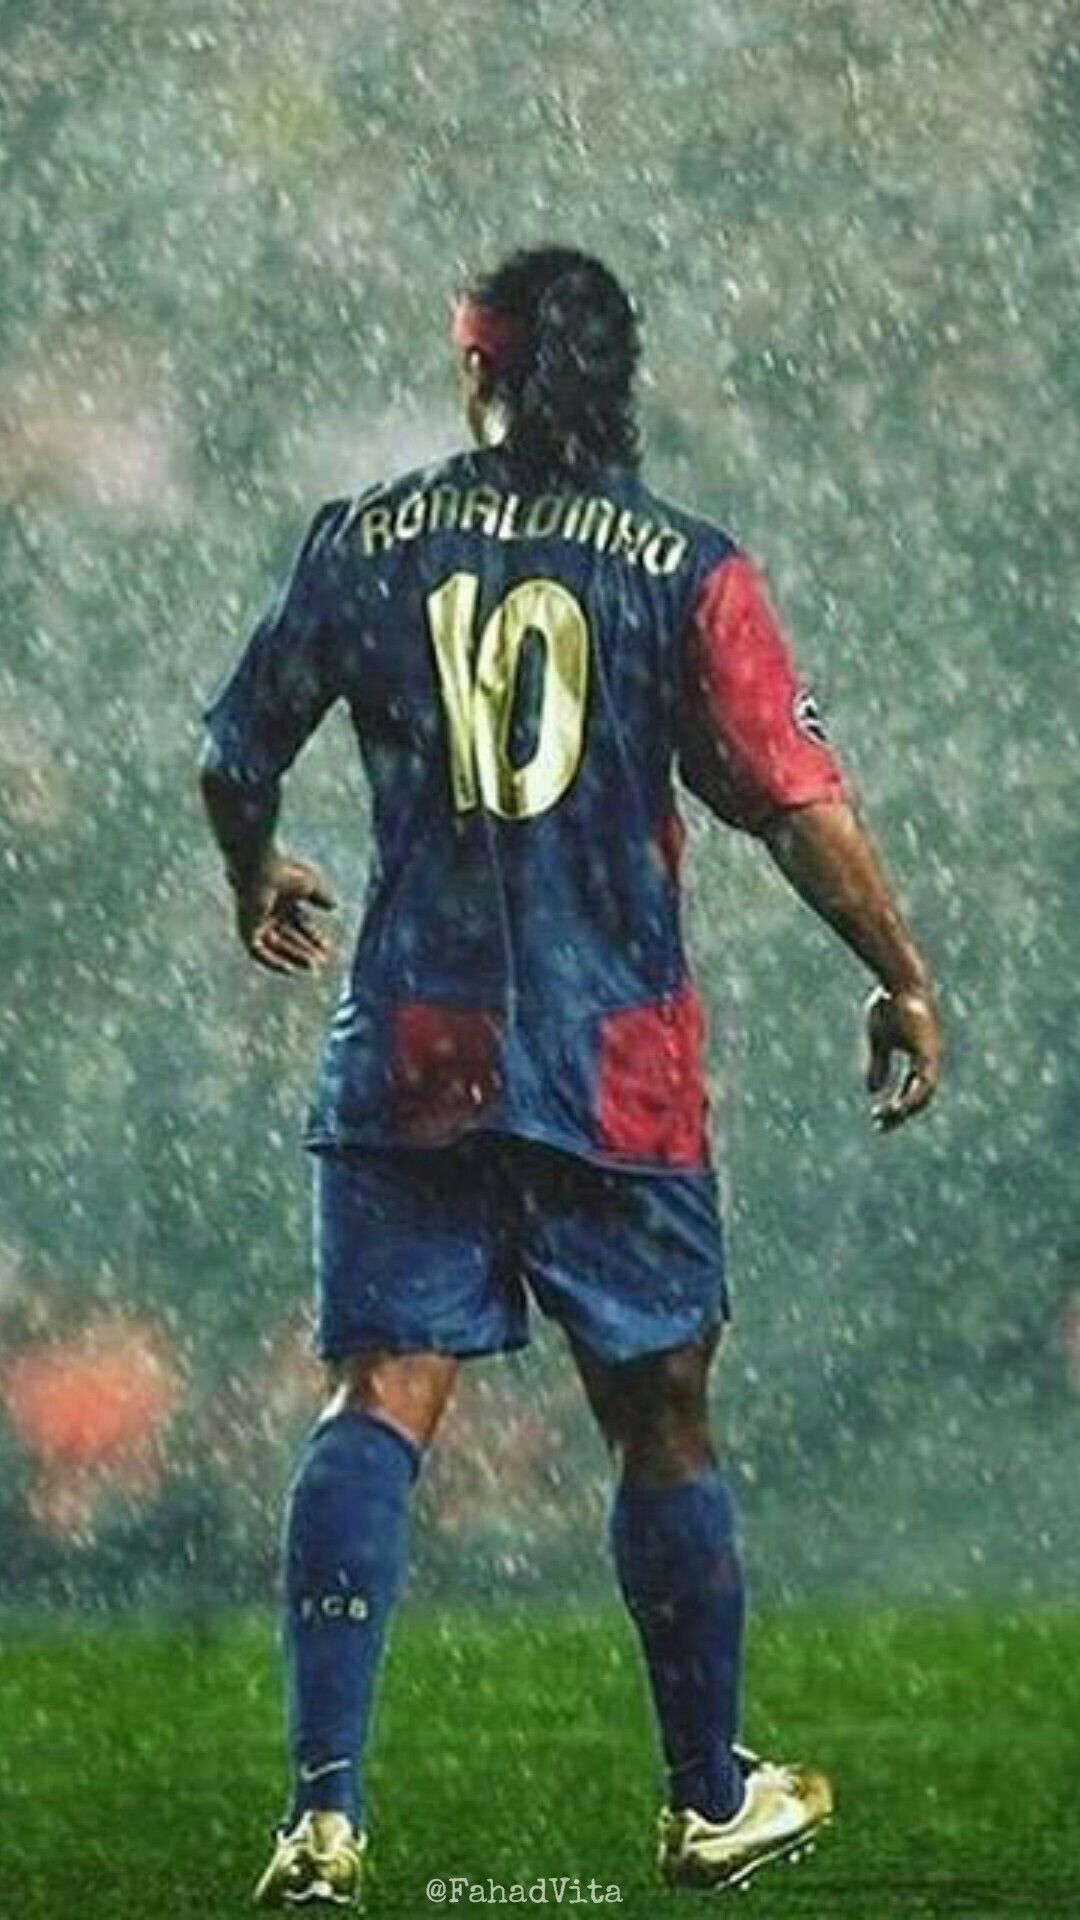 Fondos de pantalla de Ronaldinho - FondosMil